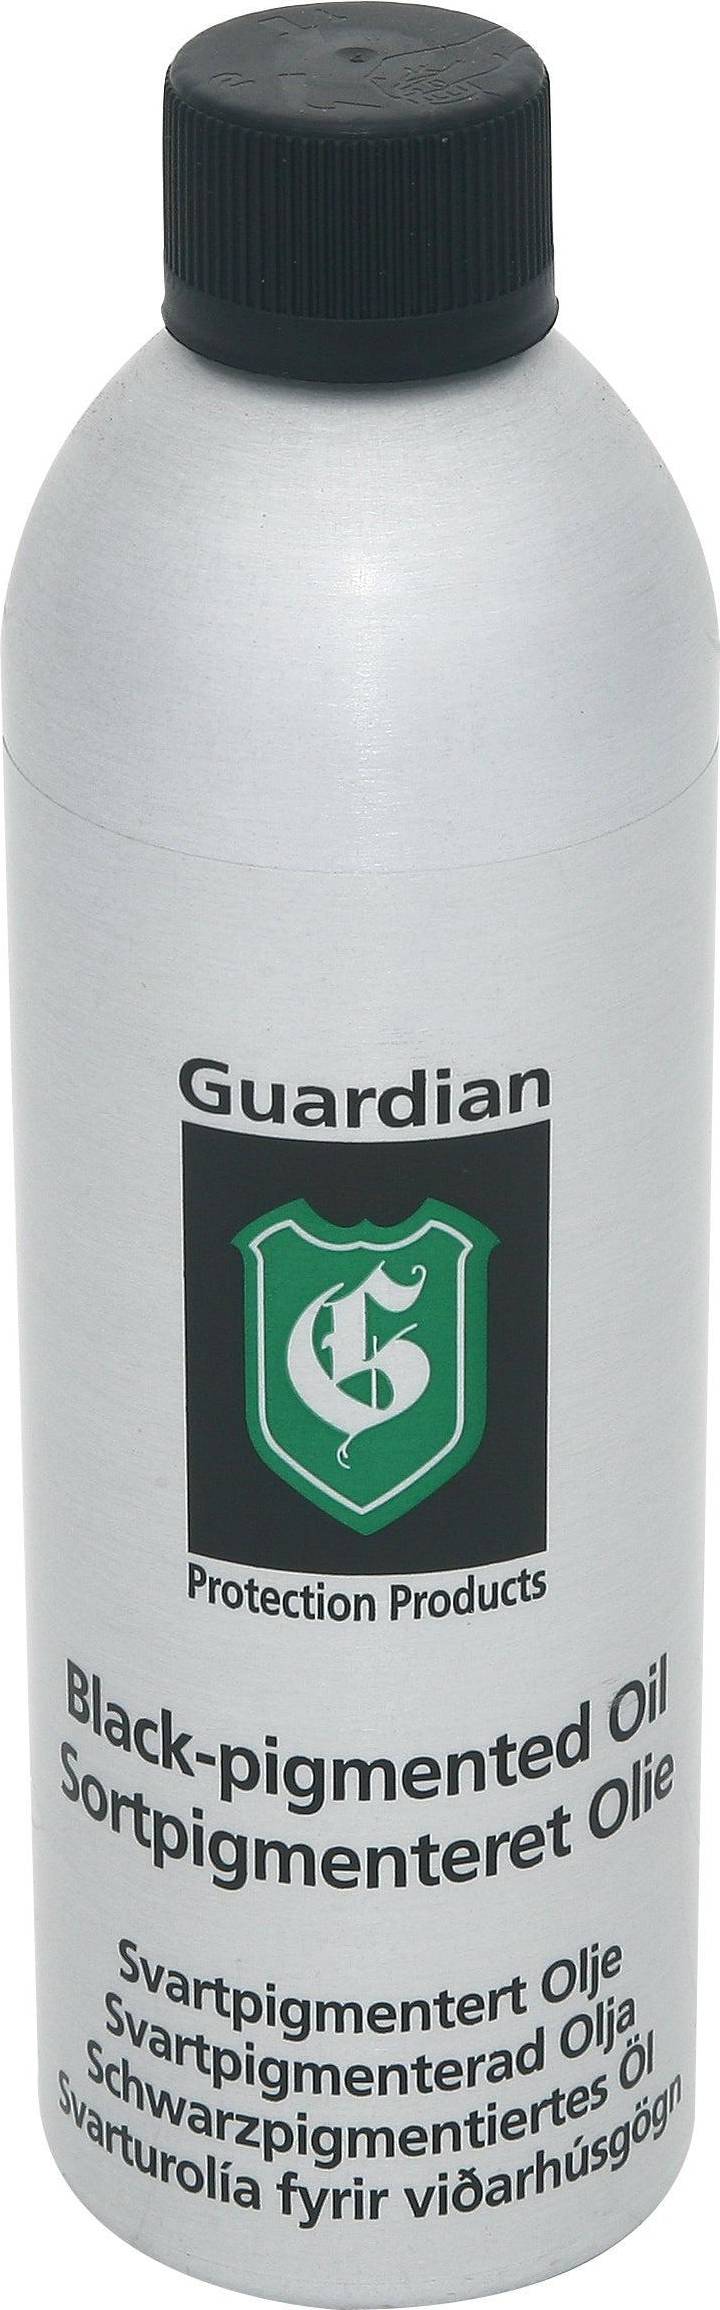 Guardian Blackpigmented Olie Transparent 0.4L